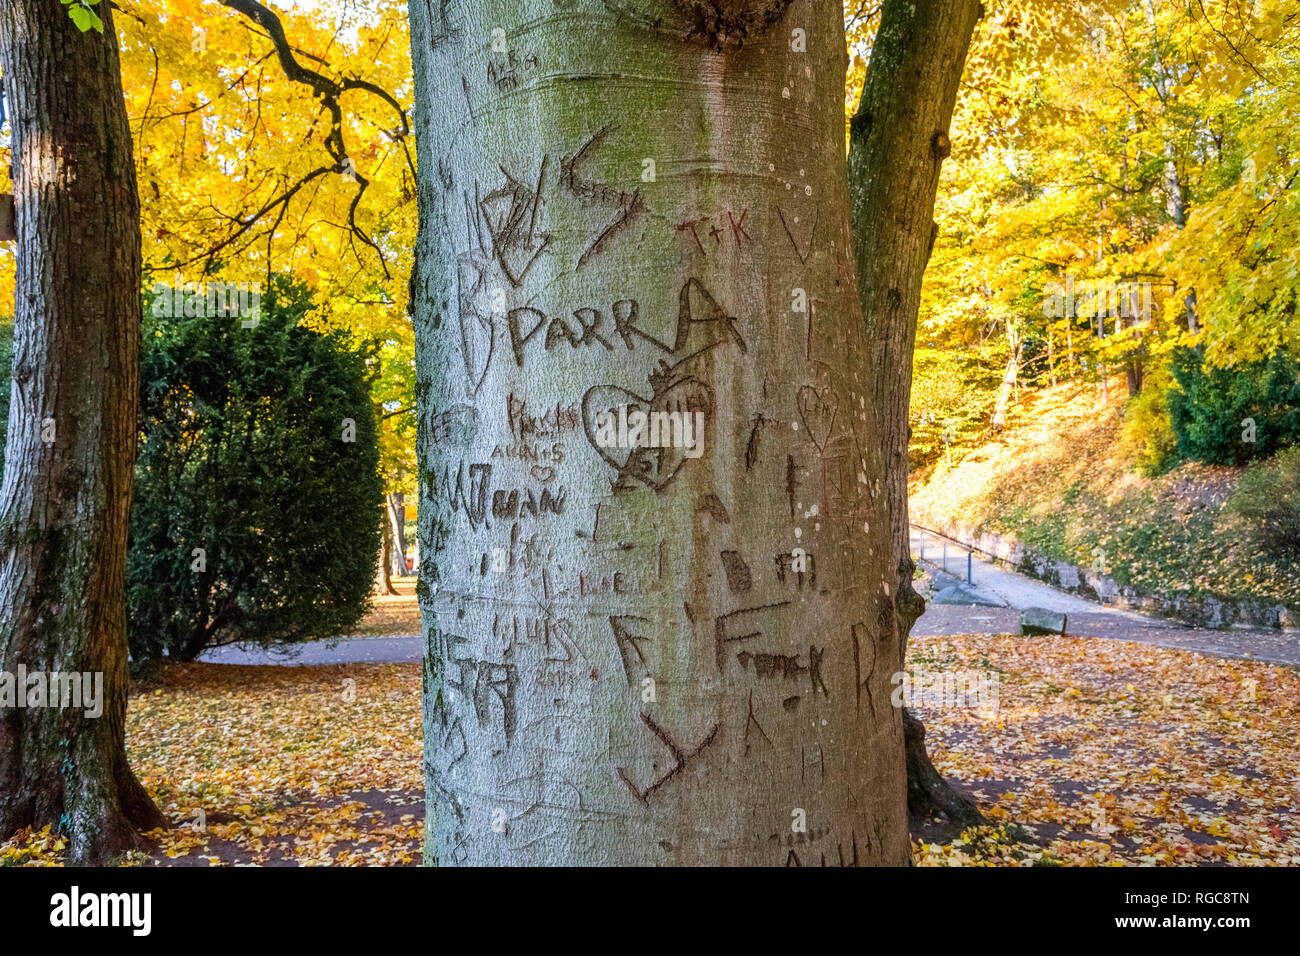 Germany, Baden-Wuerttemberg, Heidelberg,  Names and hearts scarified in tree trunks Stock Photo